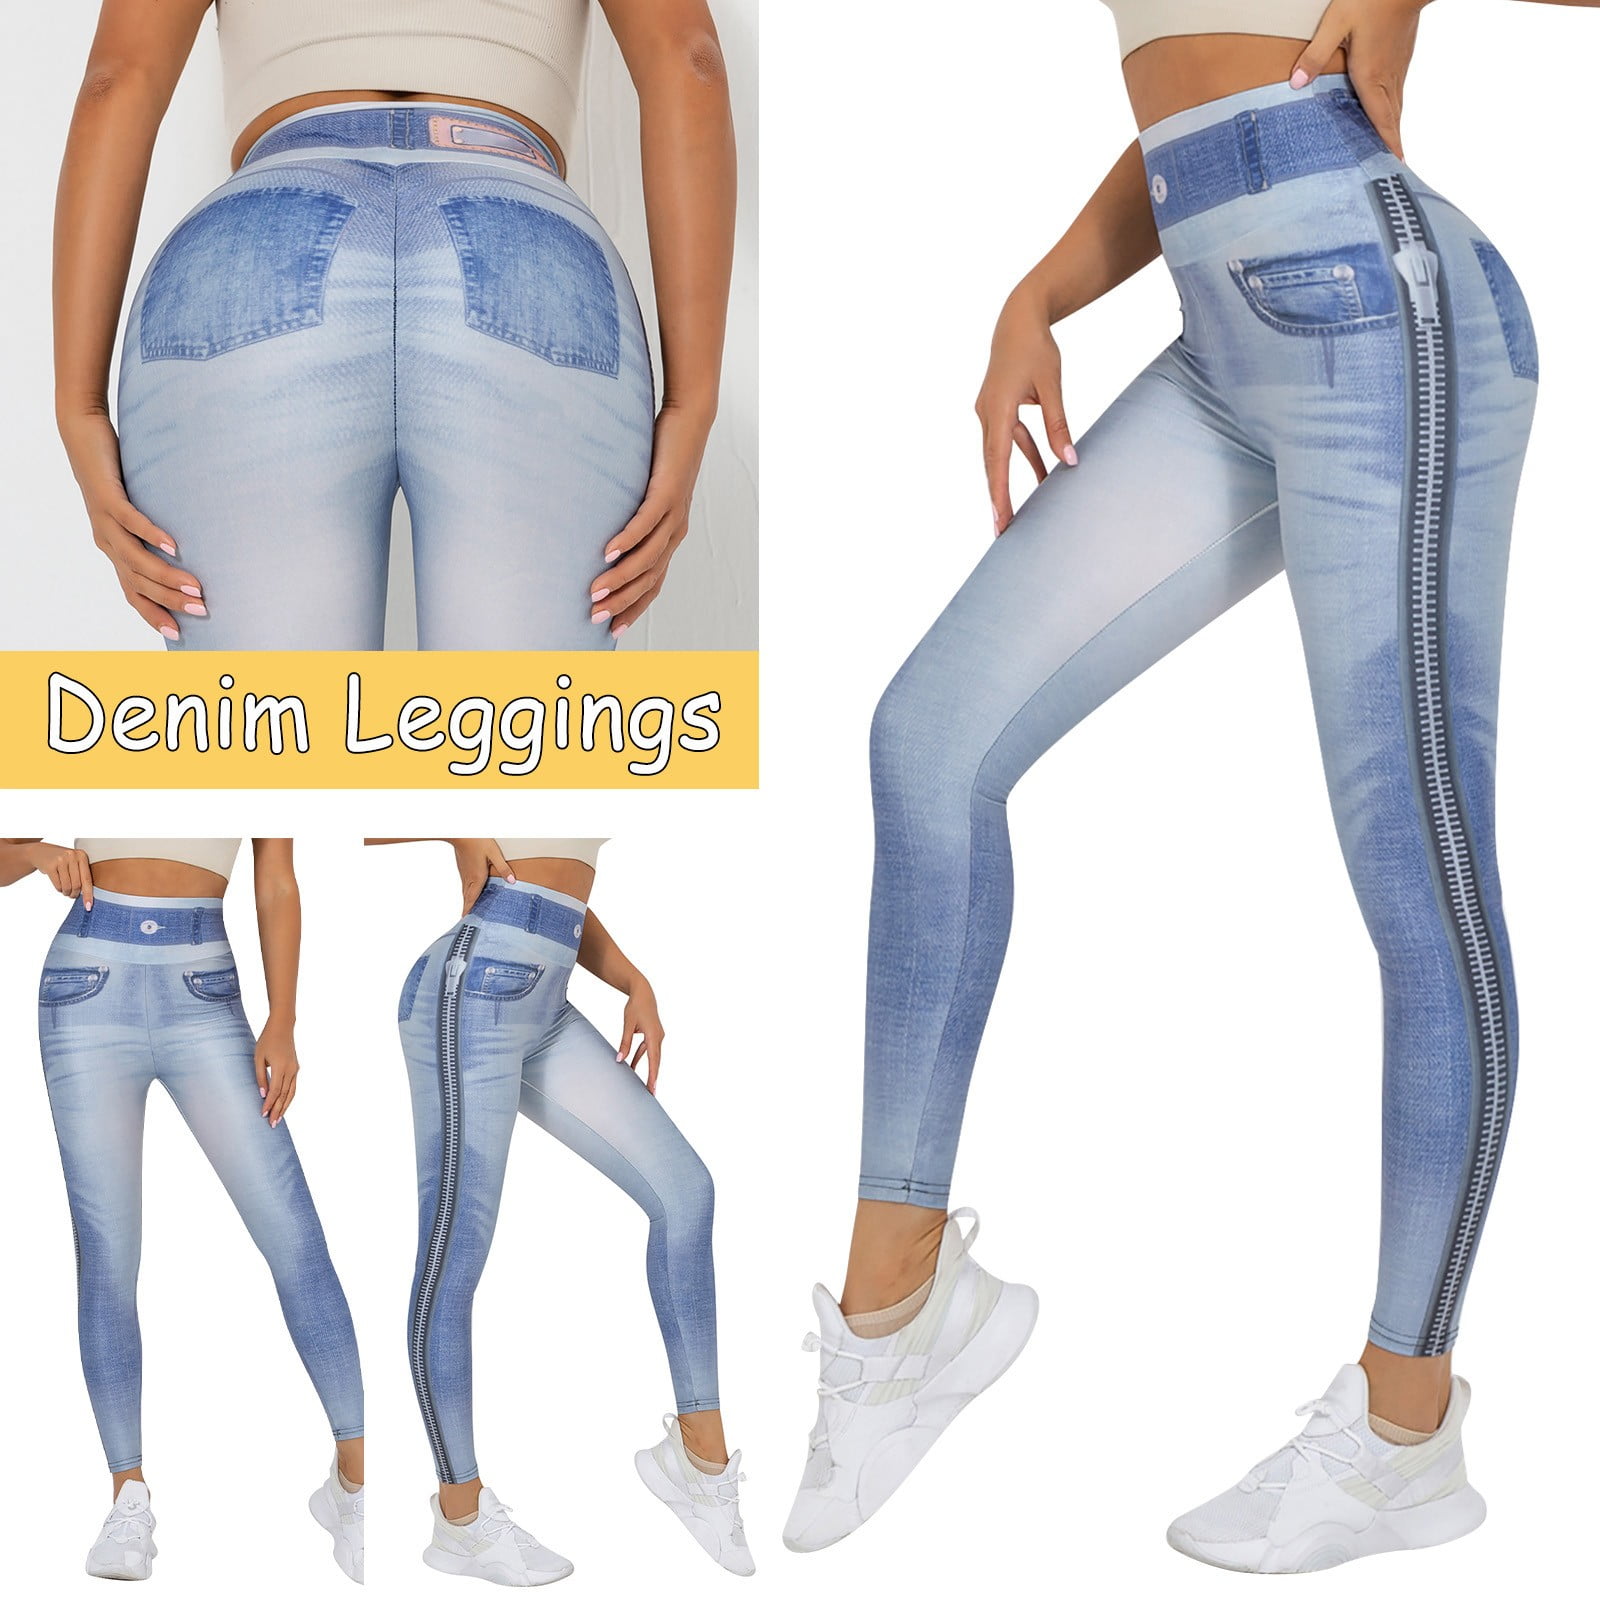 Women's Demin Print Leggings, Incredible Fit High Waist Stretch Jeggings,  Printed Denim Look, Skinny Leggings Jeggings. One Size Fits 10-16 -   Canada